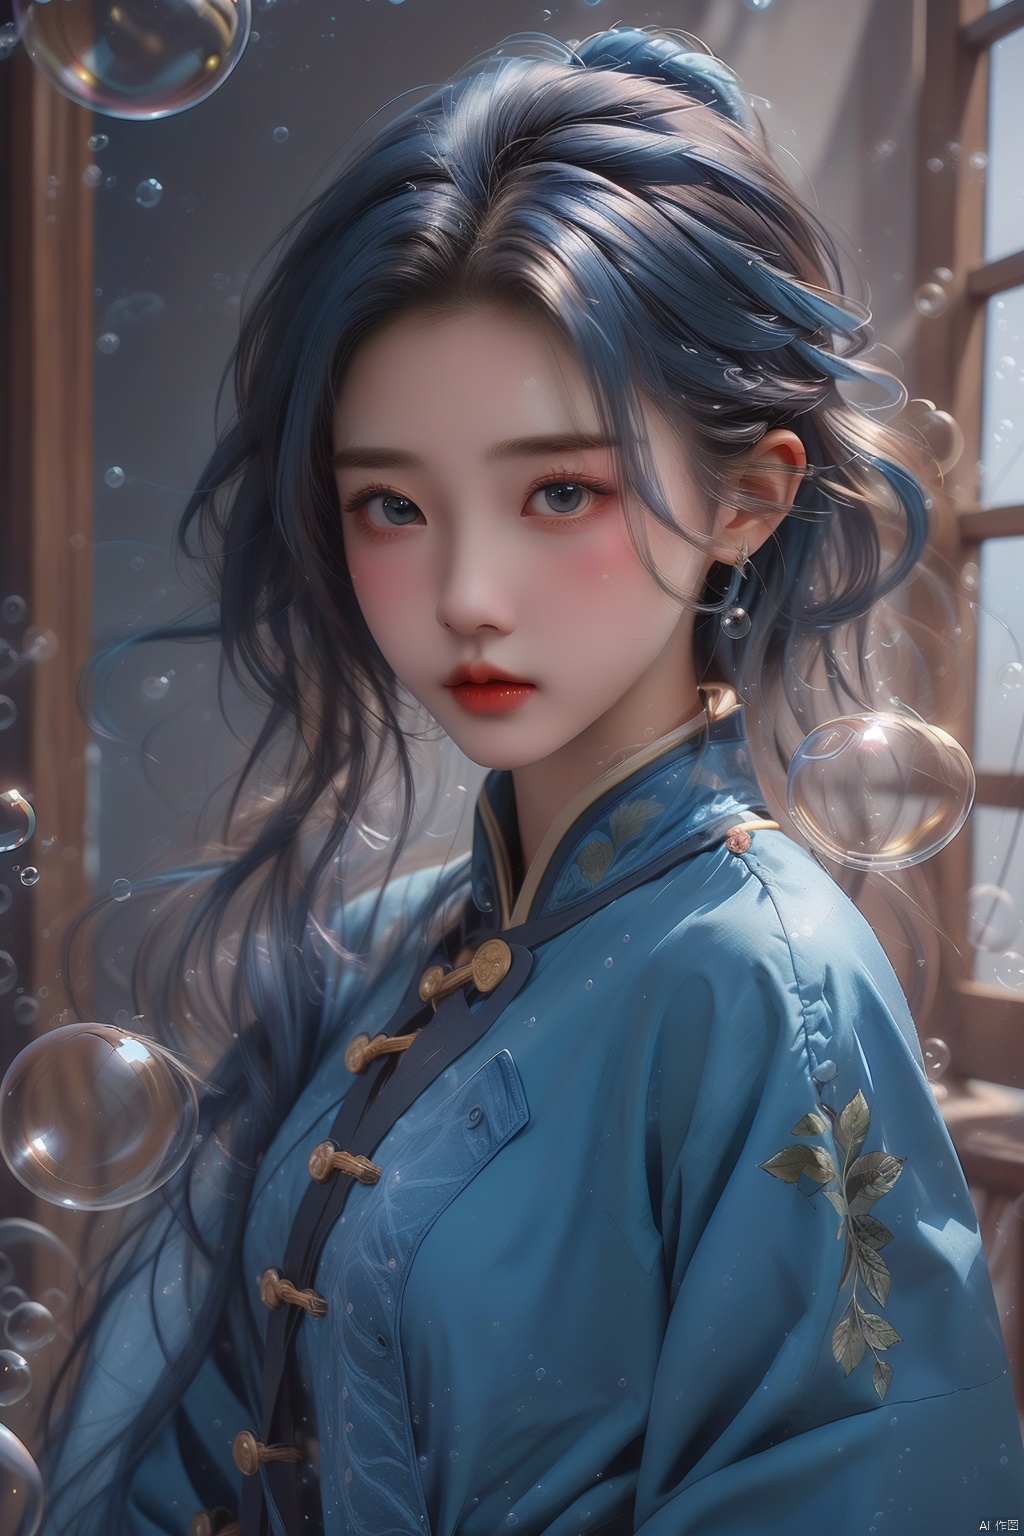  (bubble:1.5),1 girl, blue hair, blue eyes, blue attire, imperial sister,Blue eyebrows,the whole body,Short hair, (\meng ze\), (\ji jian\)